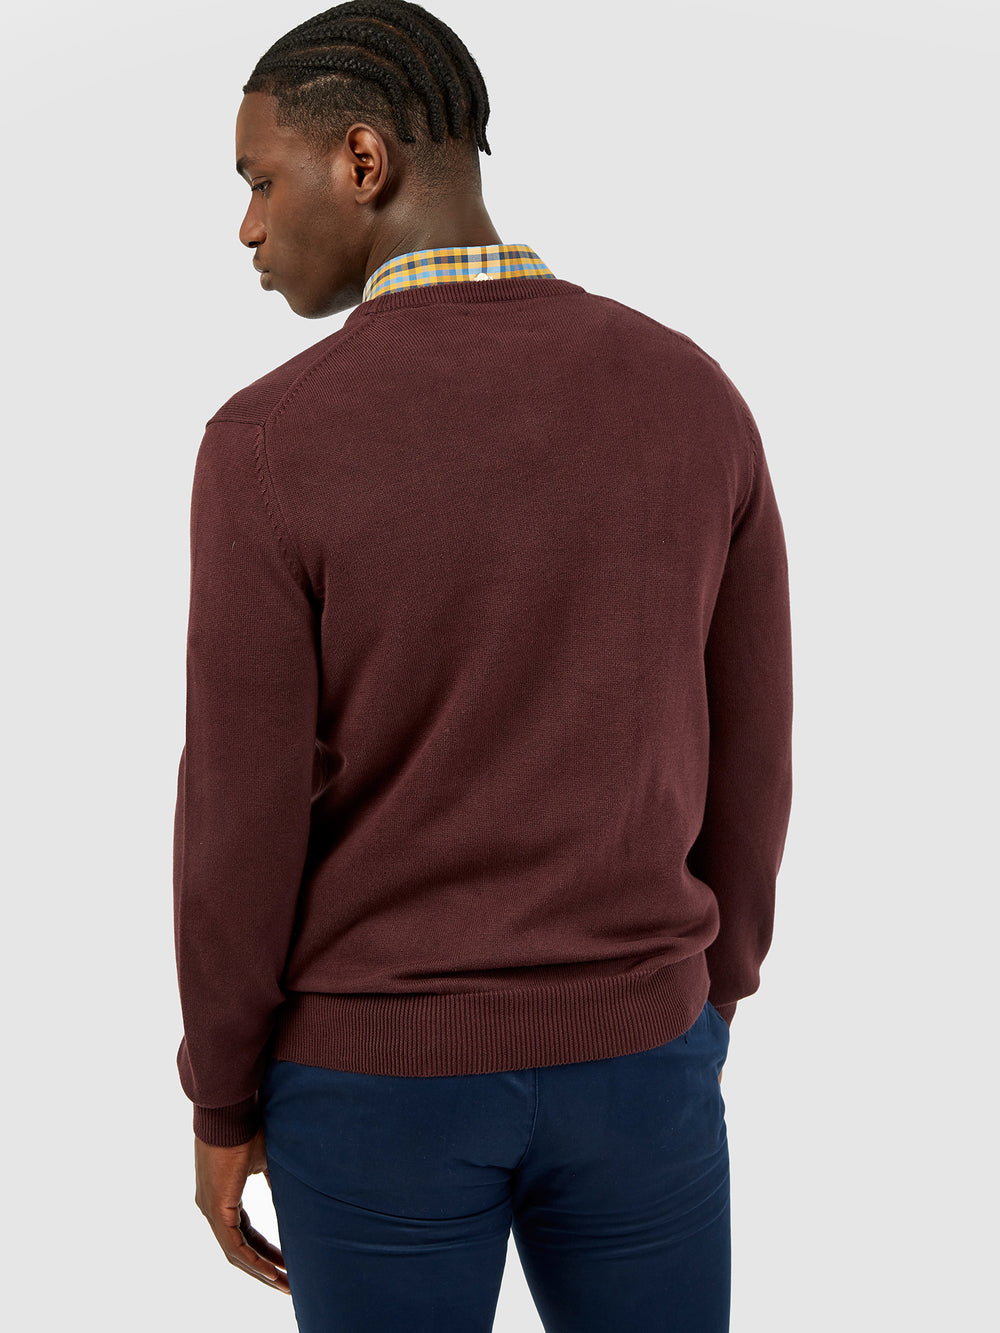 Signature Knit Crewneck Sweater - Bordeaux - Ben Sherman